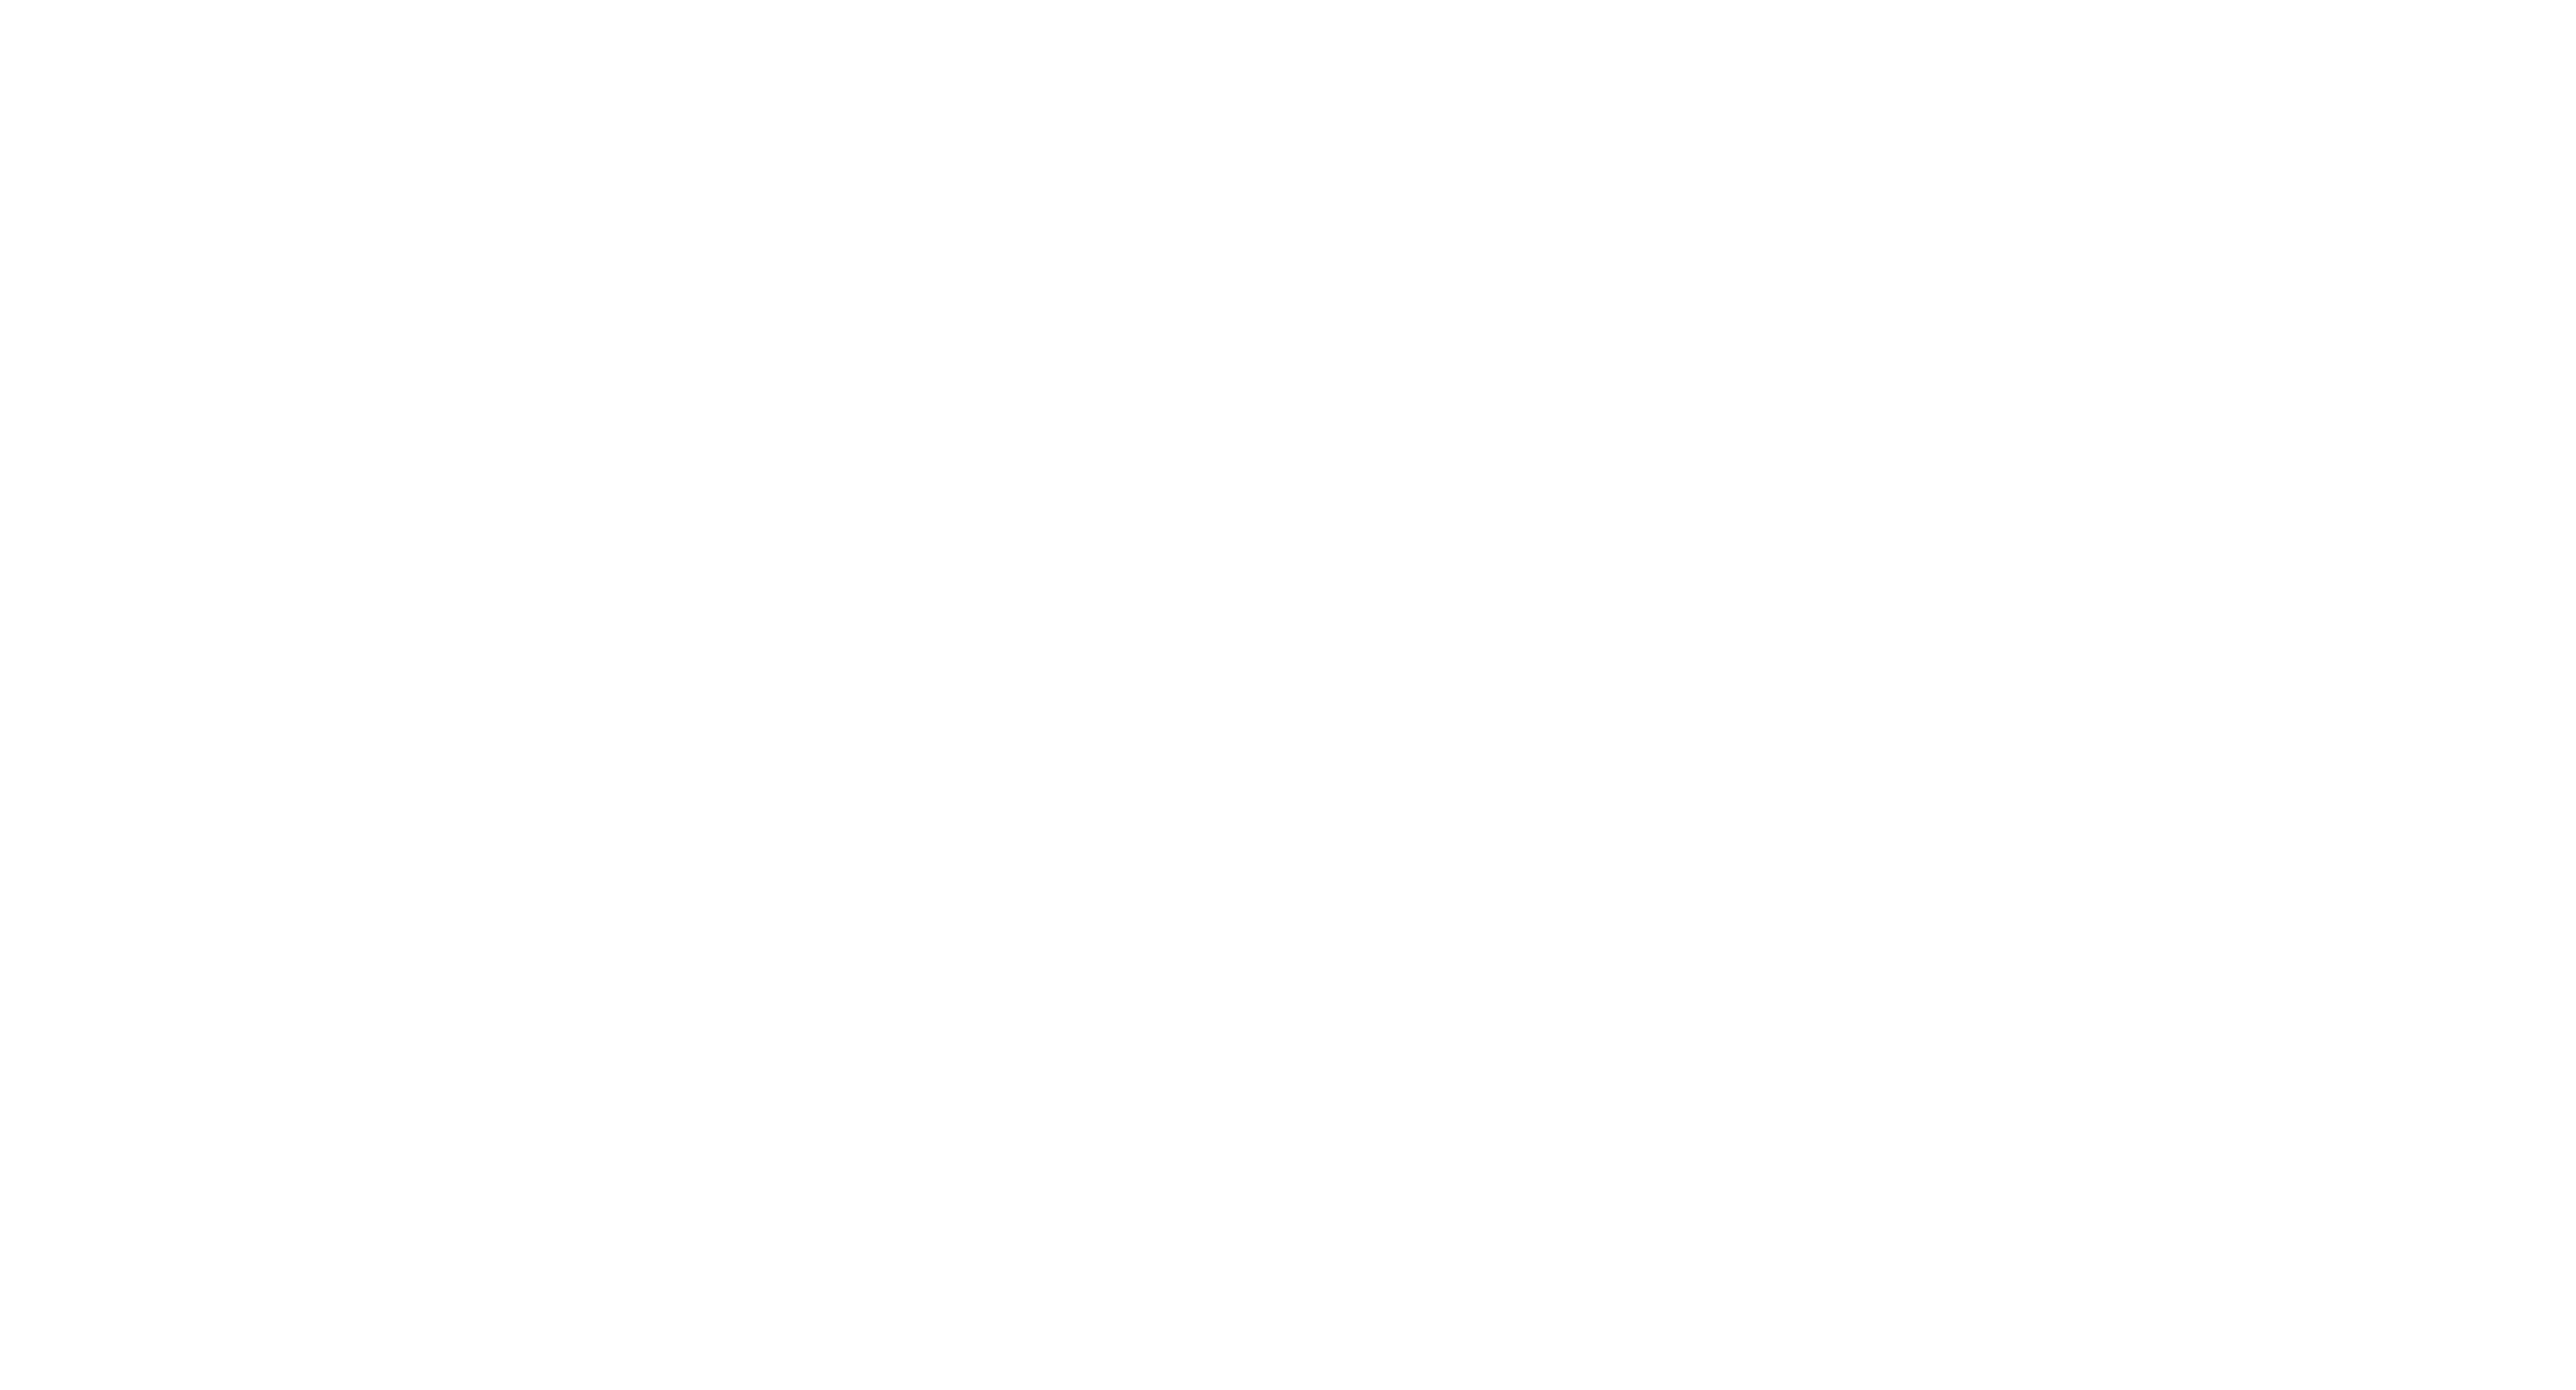 BEYOND BMORE